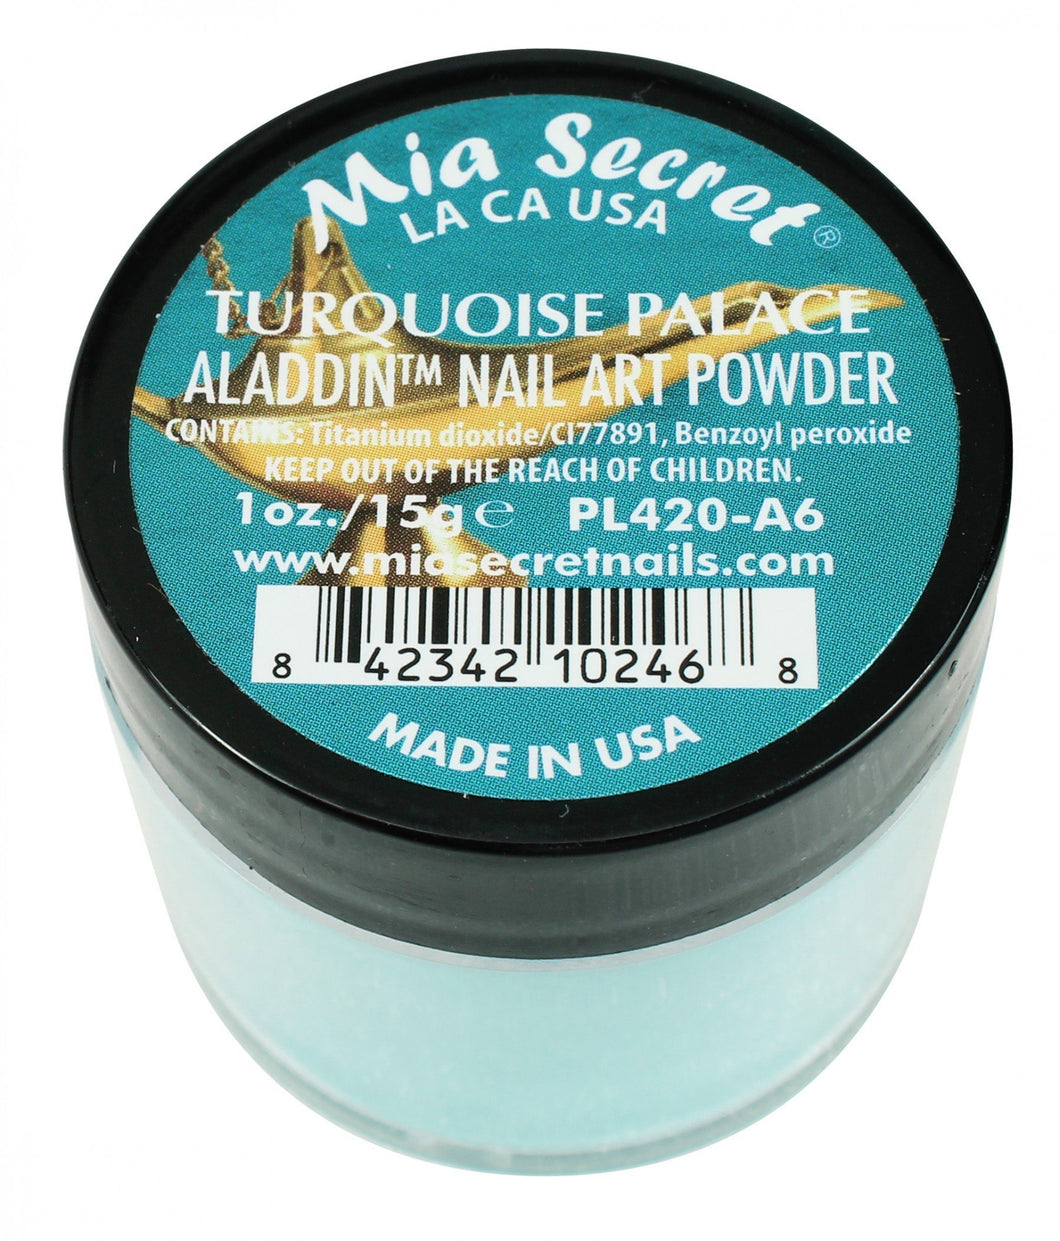 Mia Secret - Turquoise Palace Aladdin  Acrylic Powder 1 oz - #PL420-A6